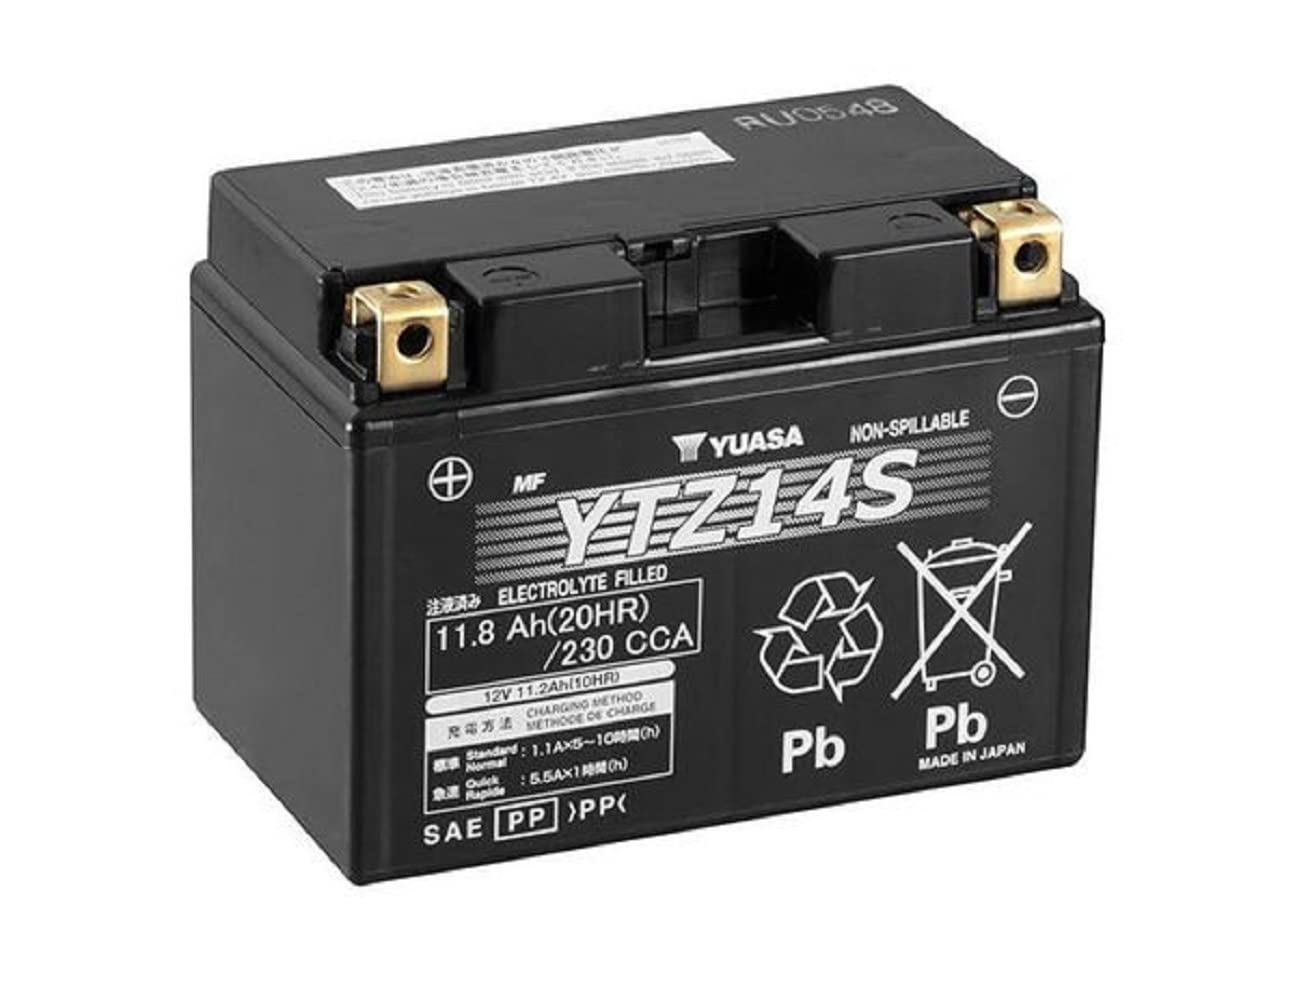 Bateria Original Yuasa Ytz14s